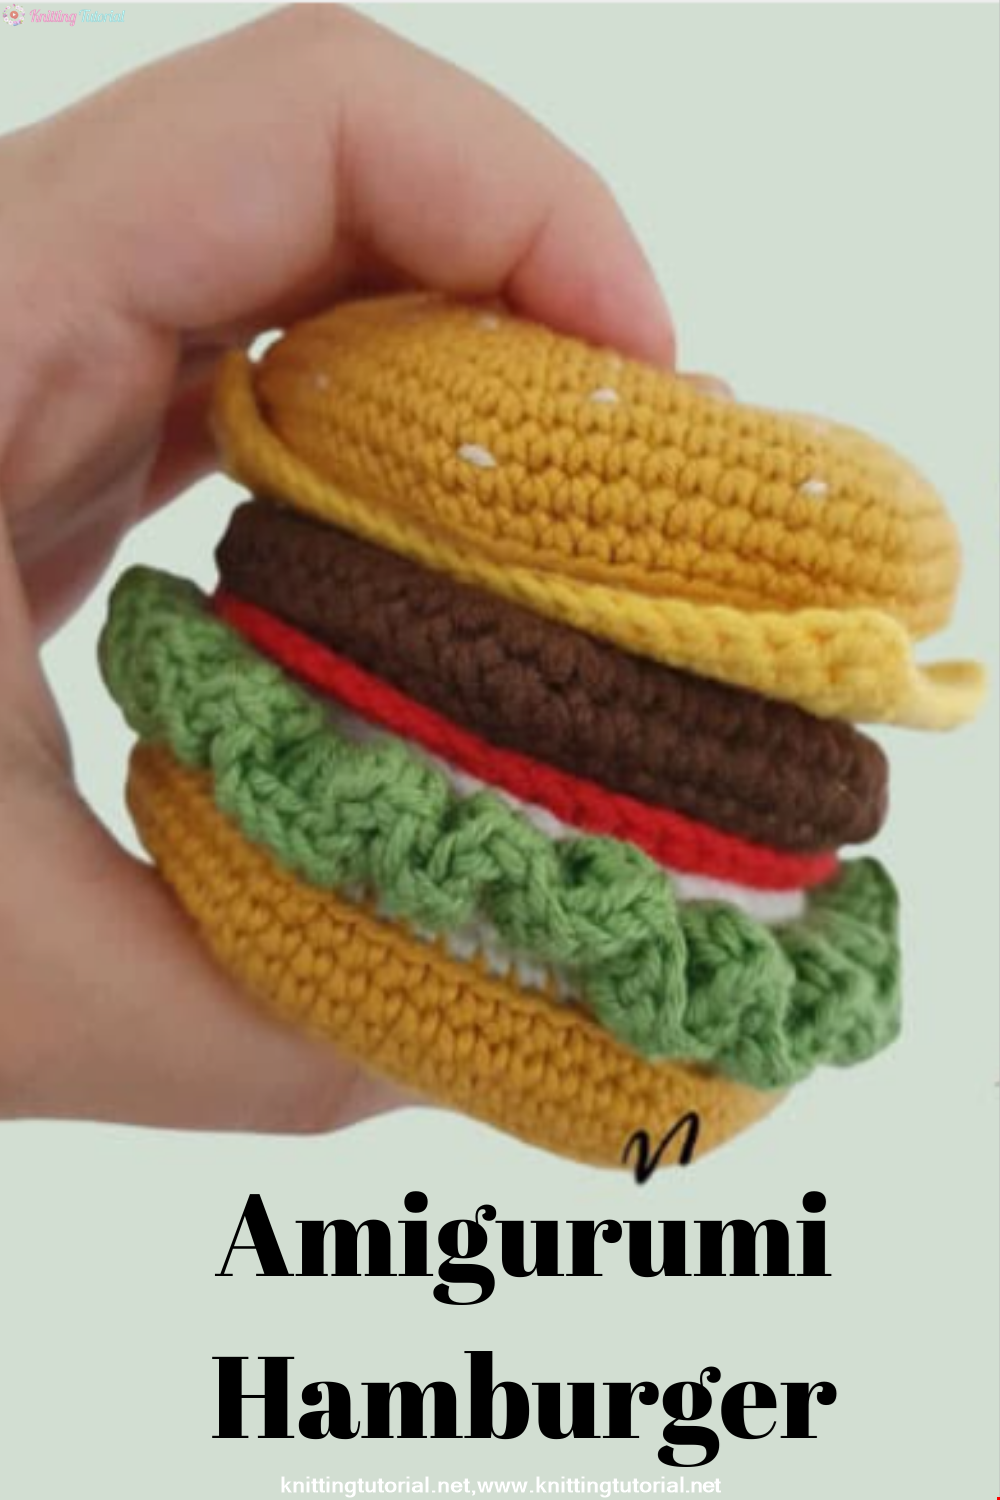 Amigurumi Hamburger Recipe and Cheeseburger Preparation